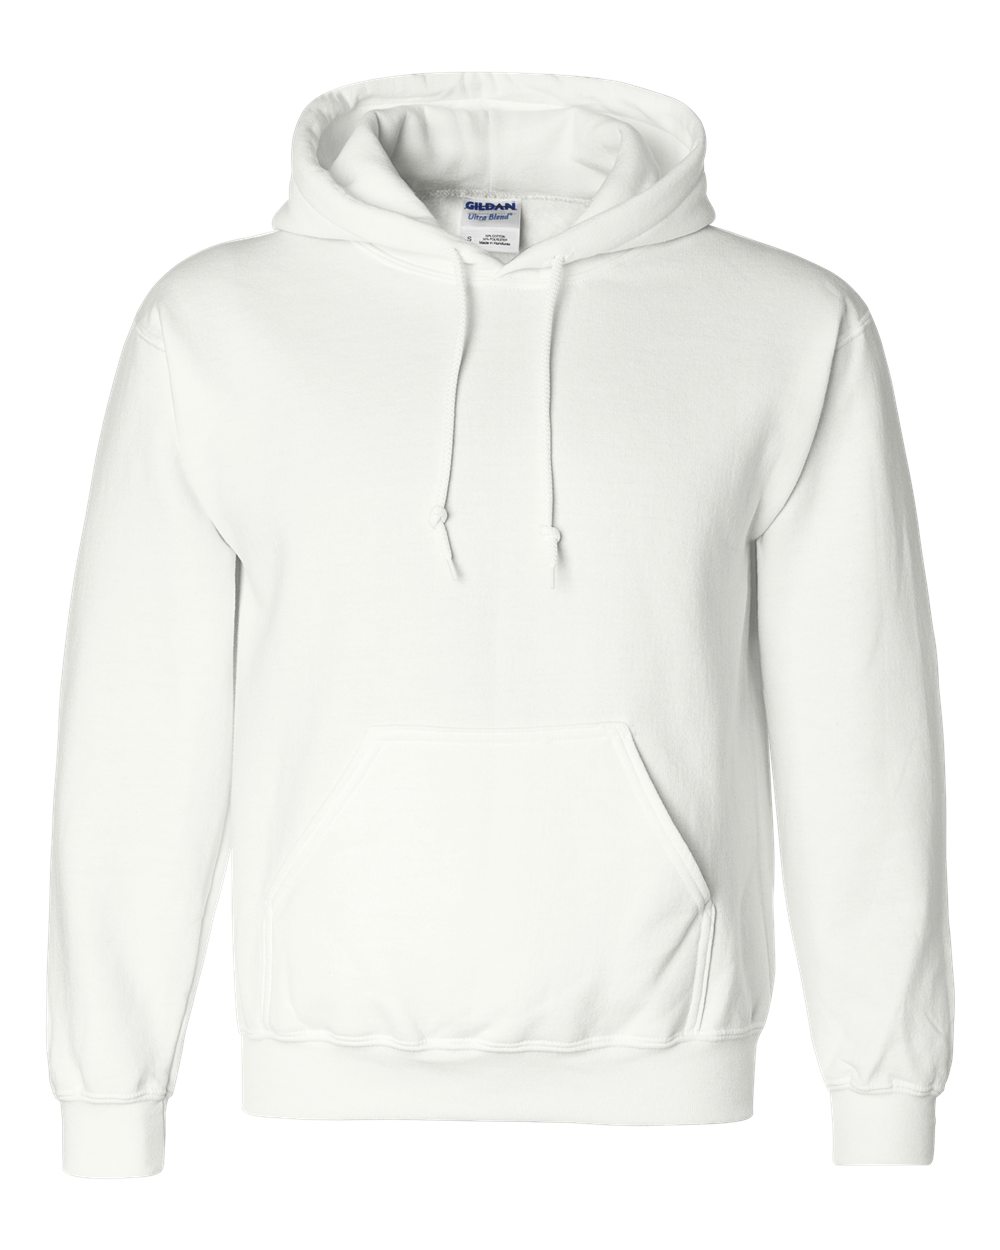 Gildan - DryBlend® Hooded Sweatshirt - 12500